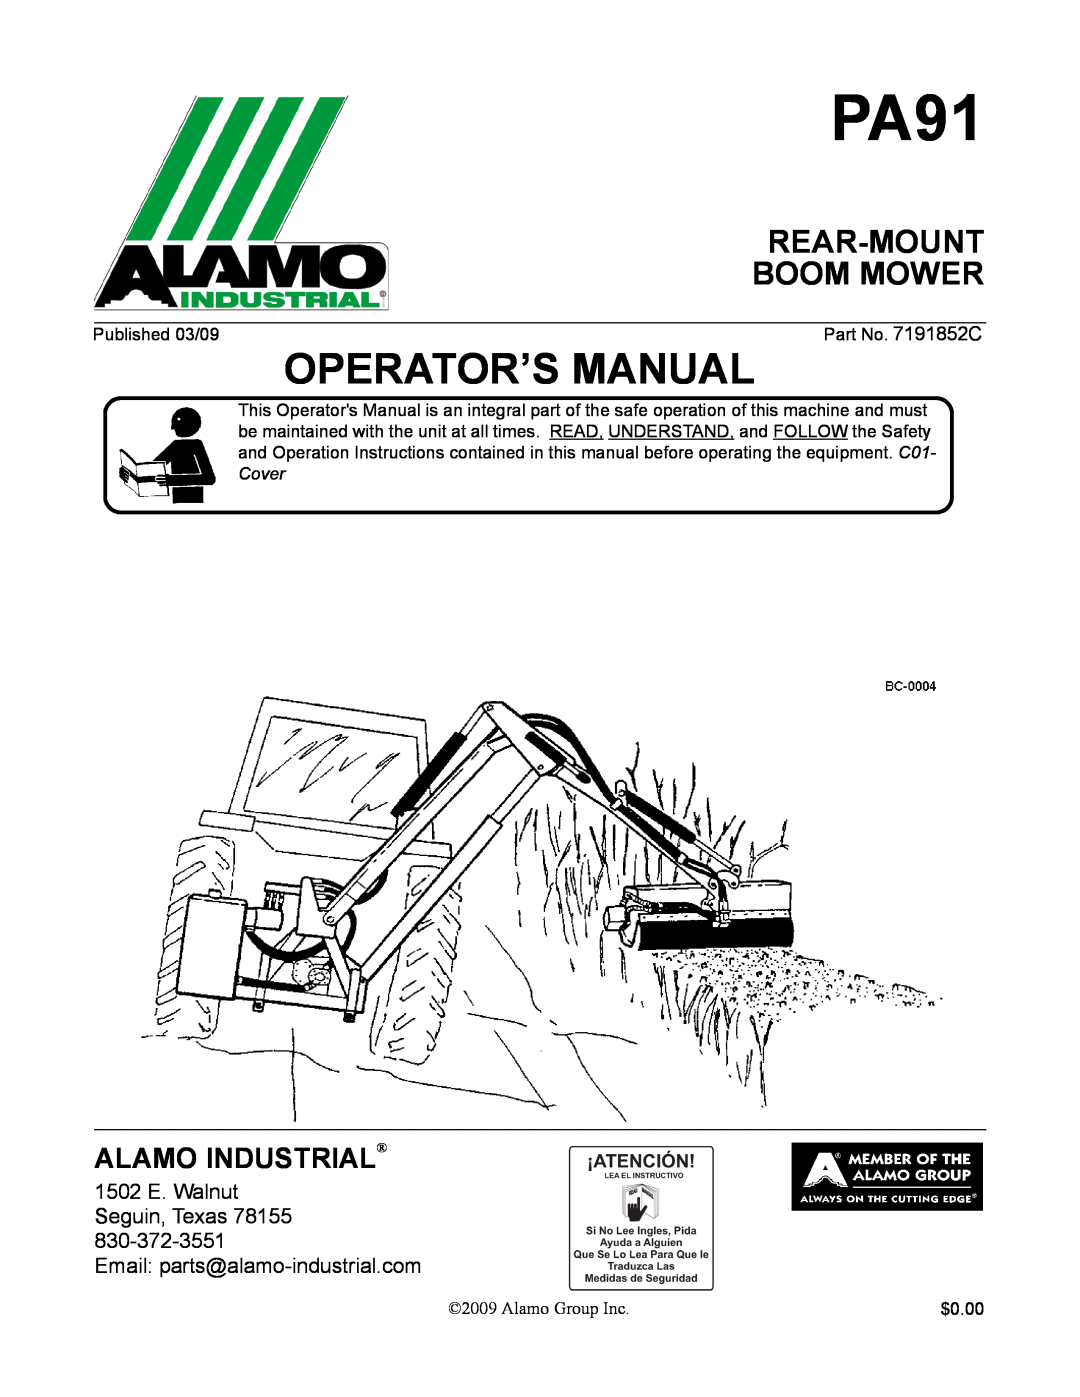 Alamo 7191852C manual PA91, Rear-Mount Boom Mower, Operator’S Manual, Alamo Industrial, 1502 E. Walnut Seguin, Texas 78155 